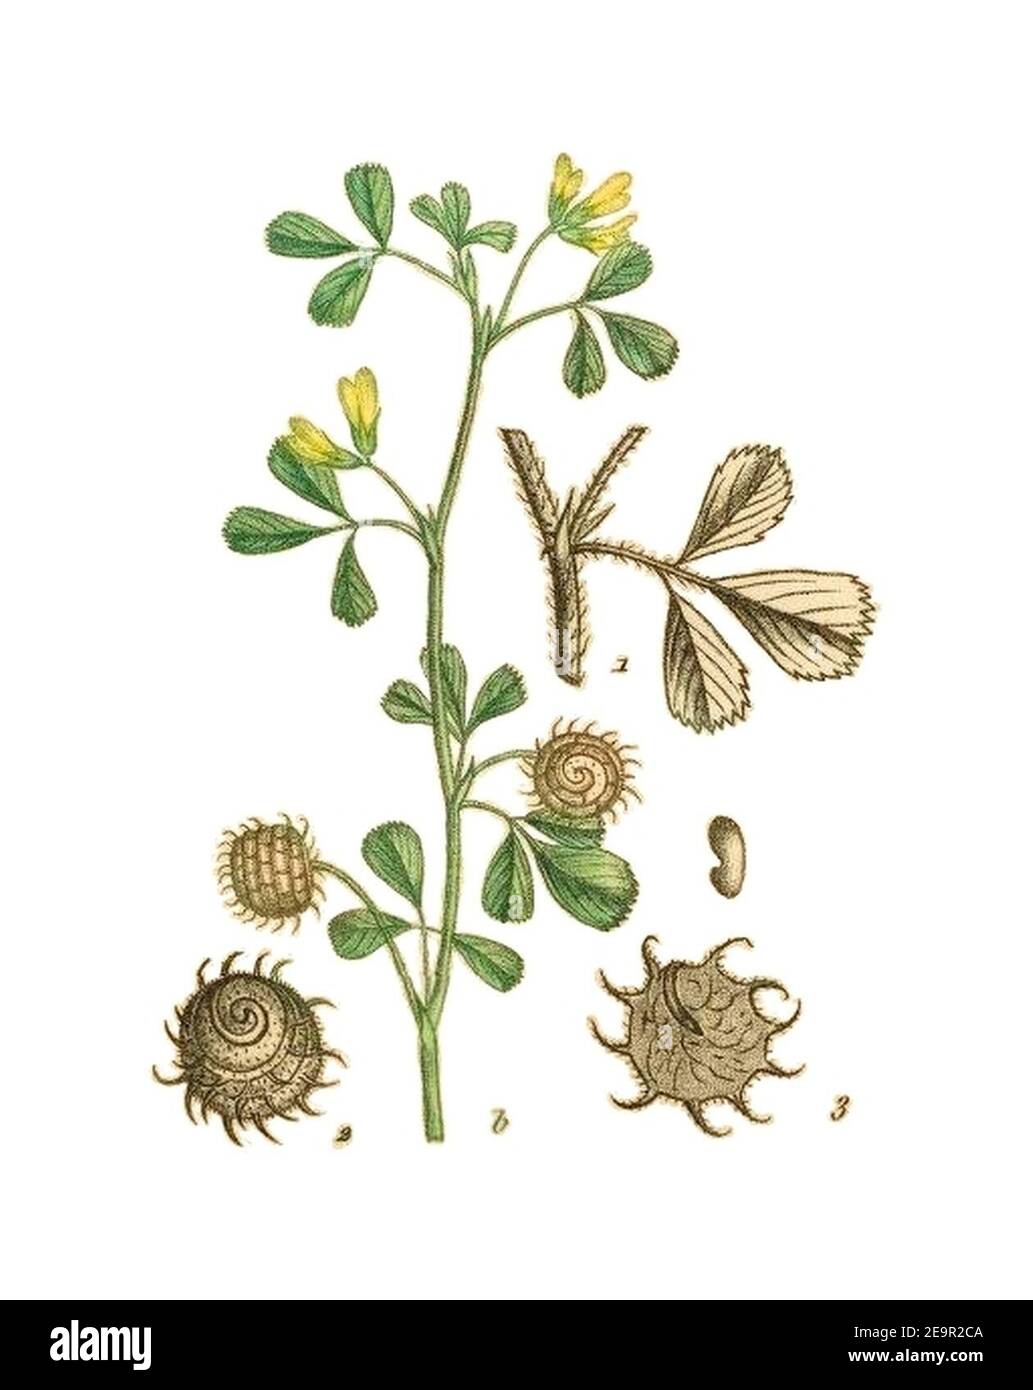 Medicago rigidula—La flore et la pomone françaises. Stock Photo